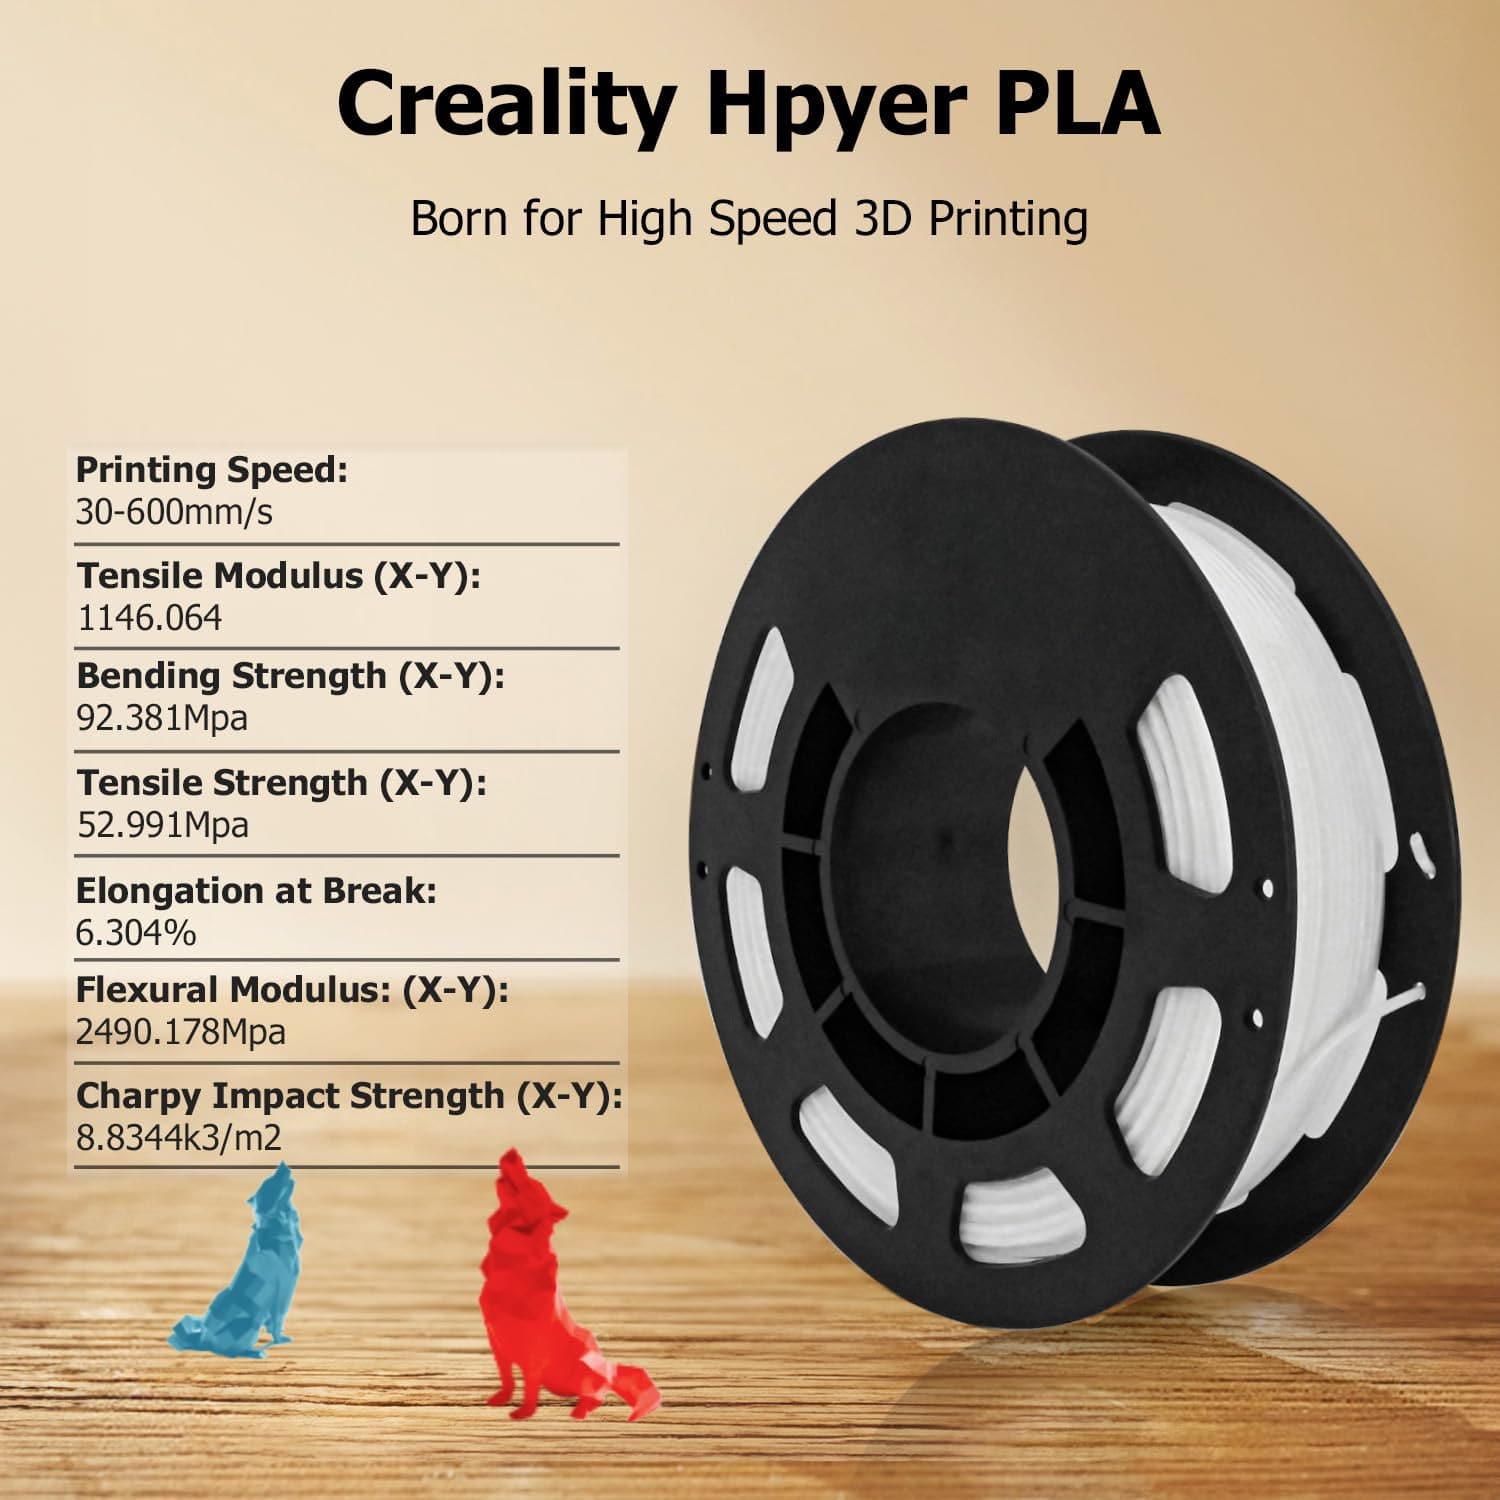 Creality Official 3D Printer Filament Hyper PLA Filament, Creality